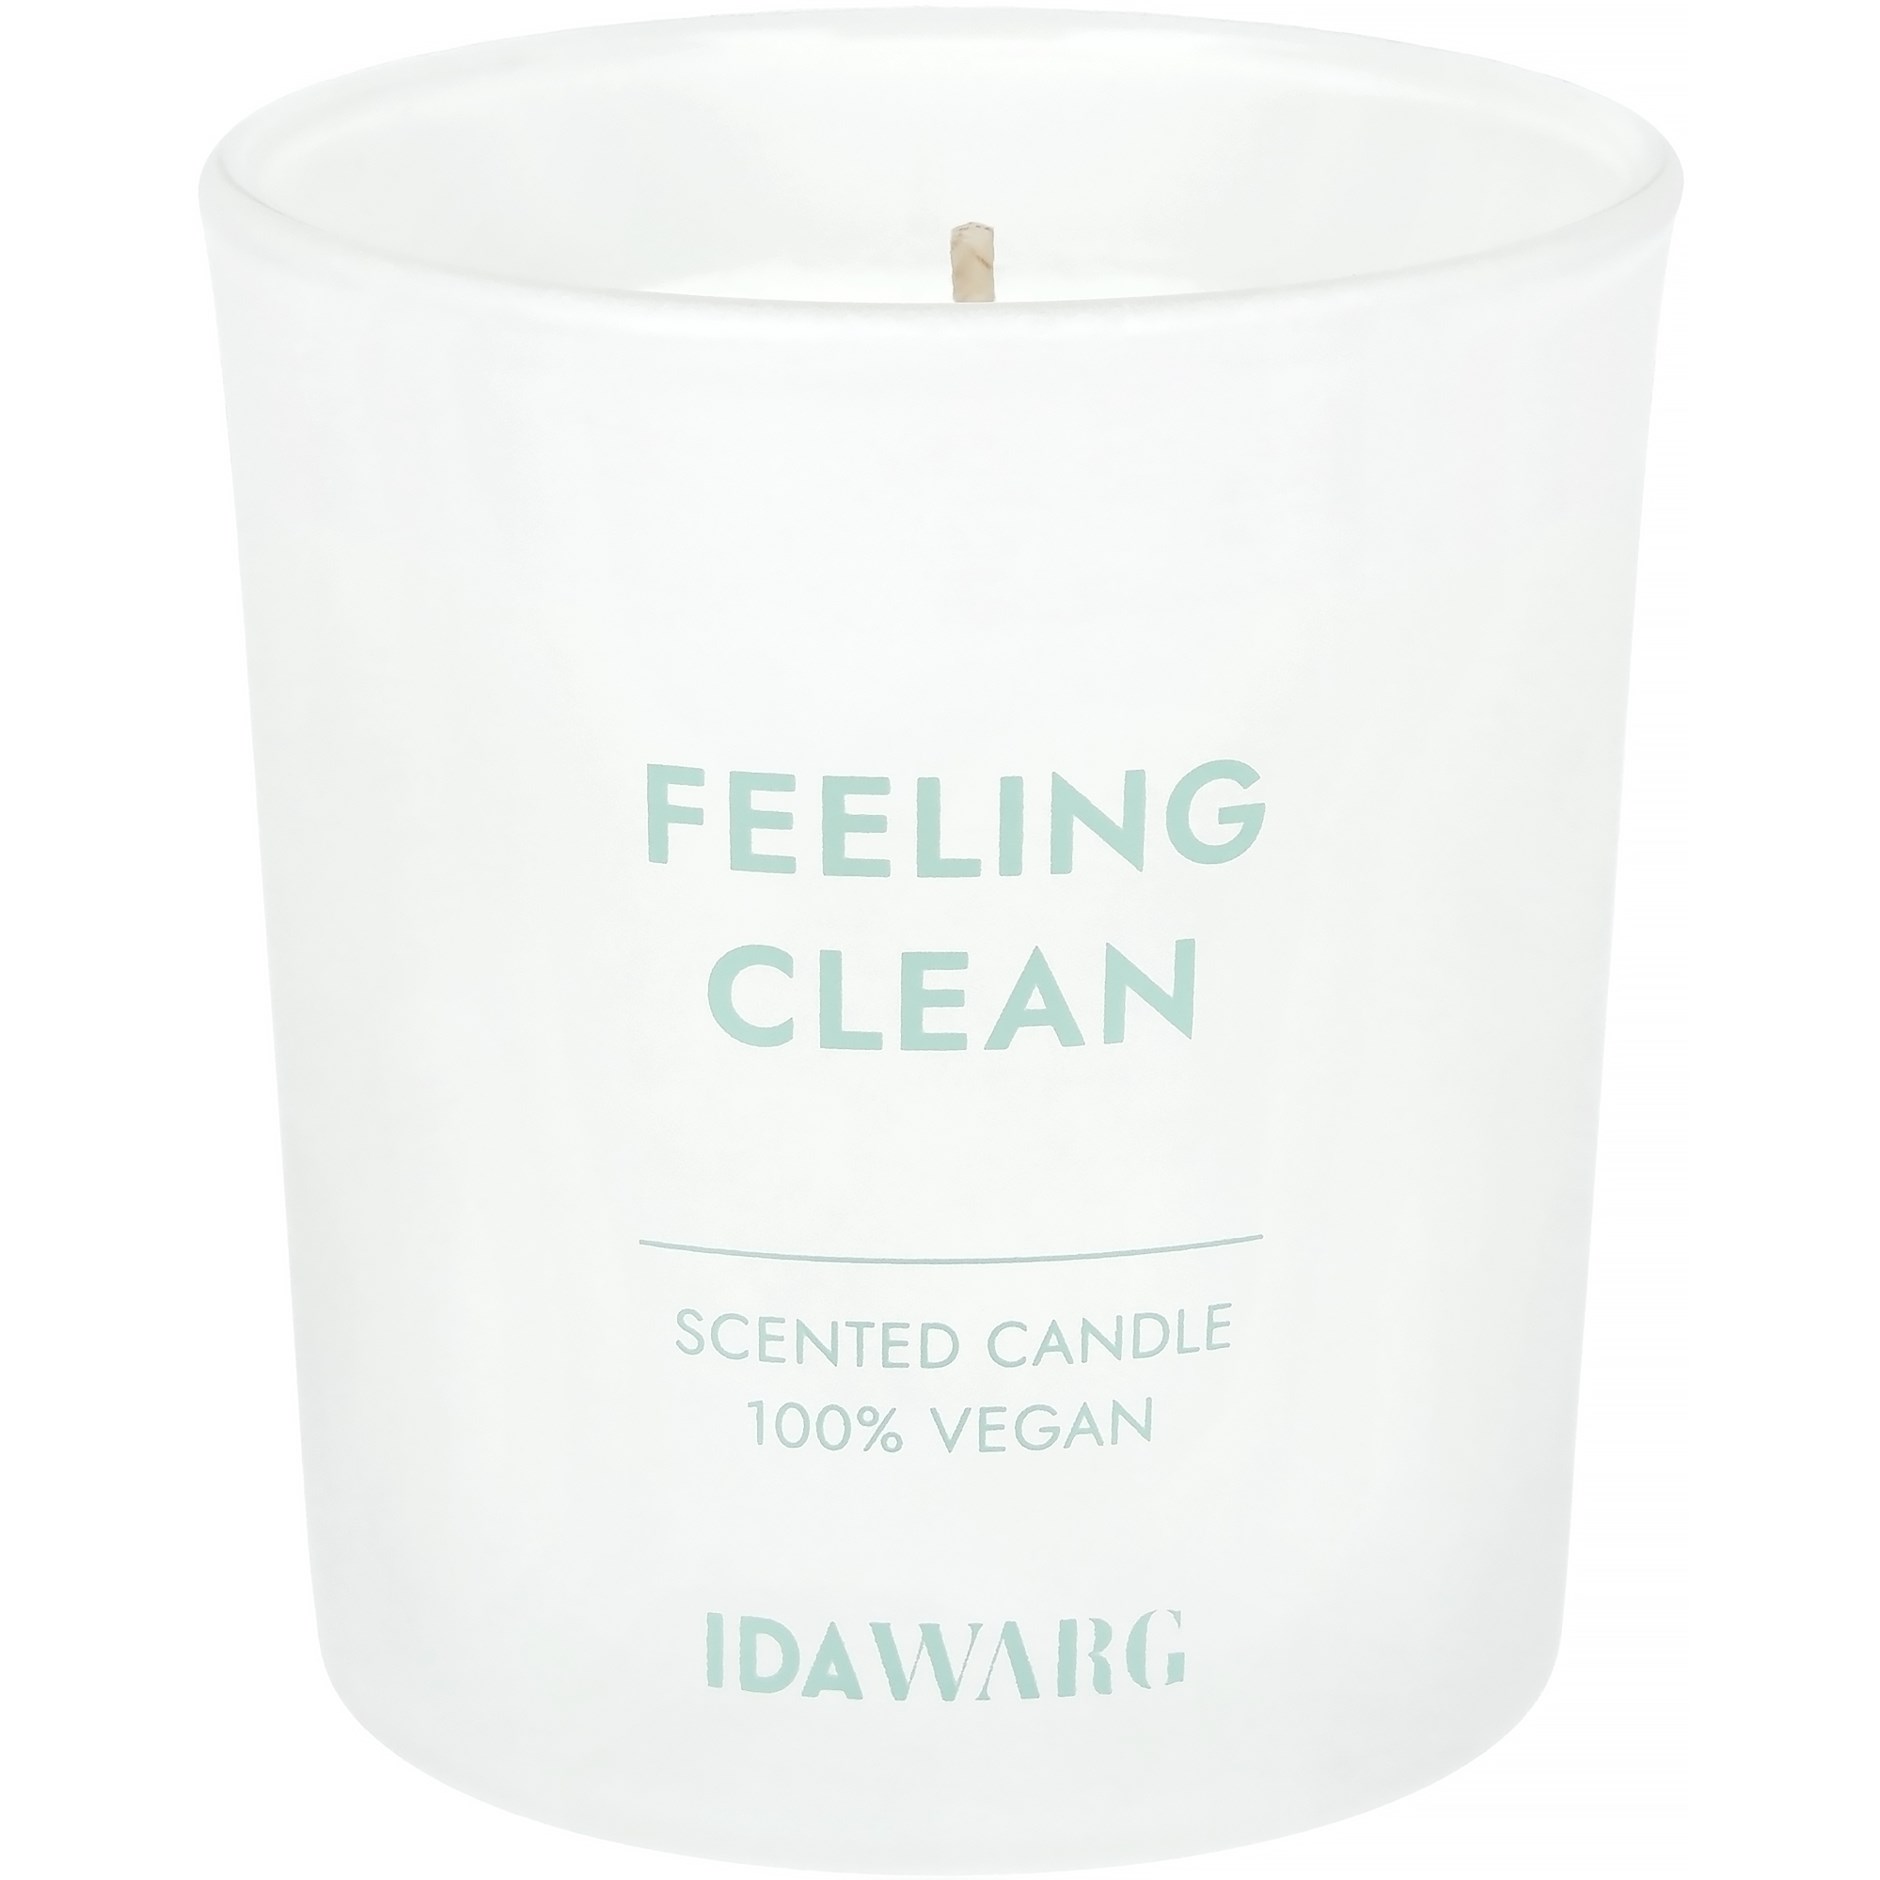 Ida Warg Feeling Clean Scented Candle